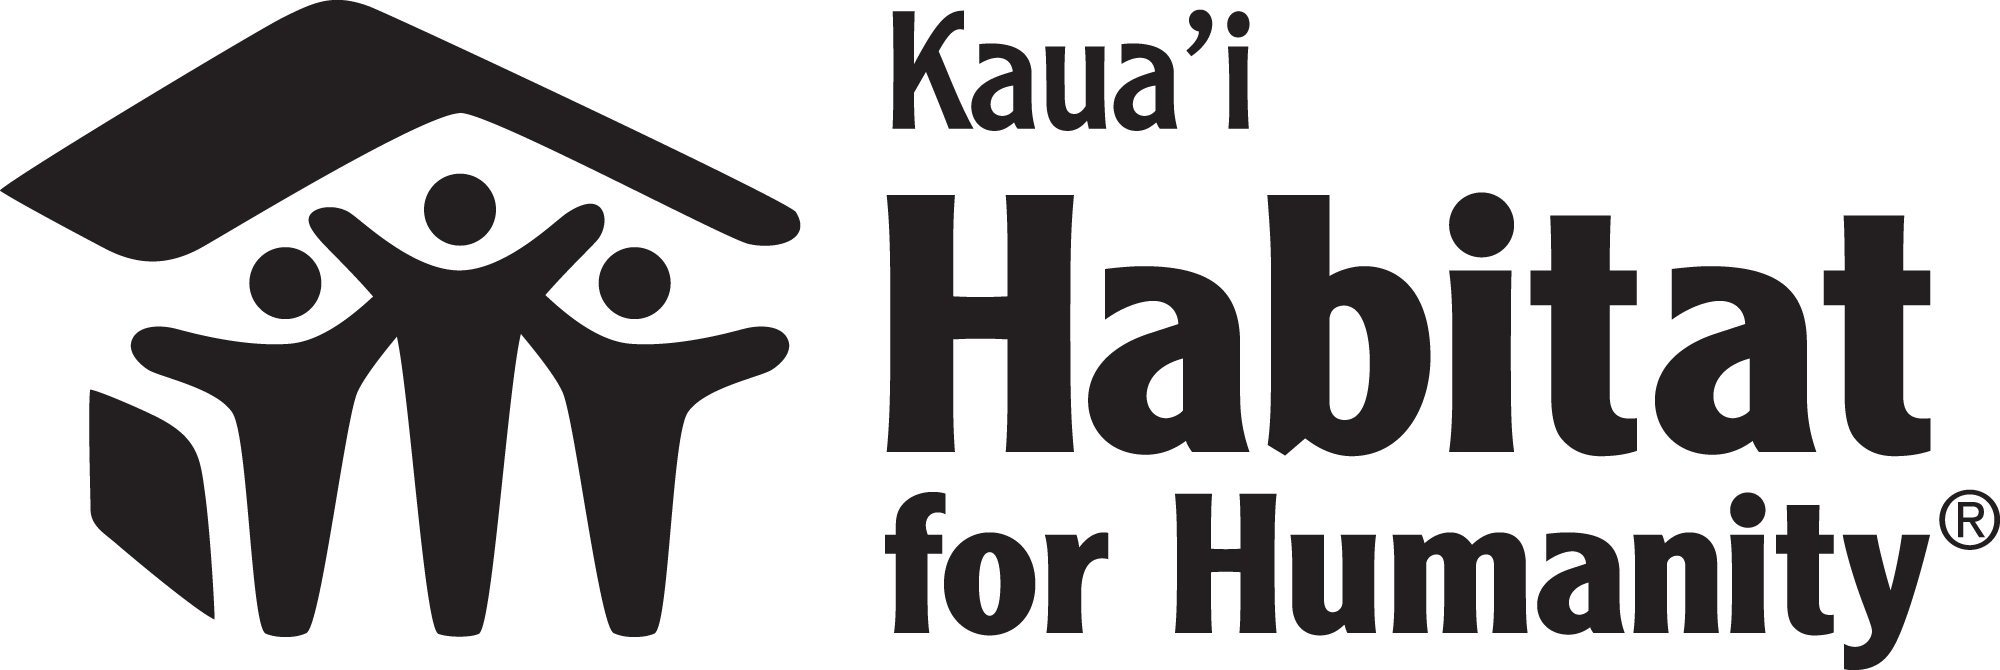 Kauai_Hz_Black .png